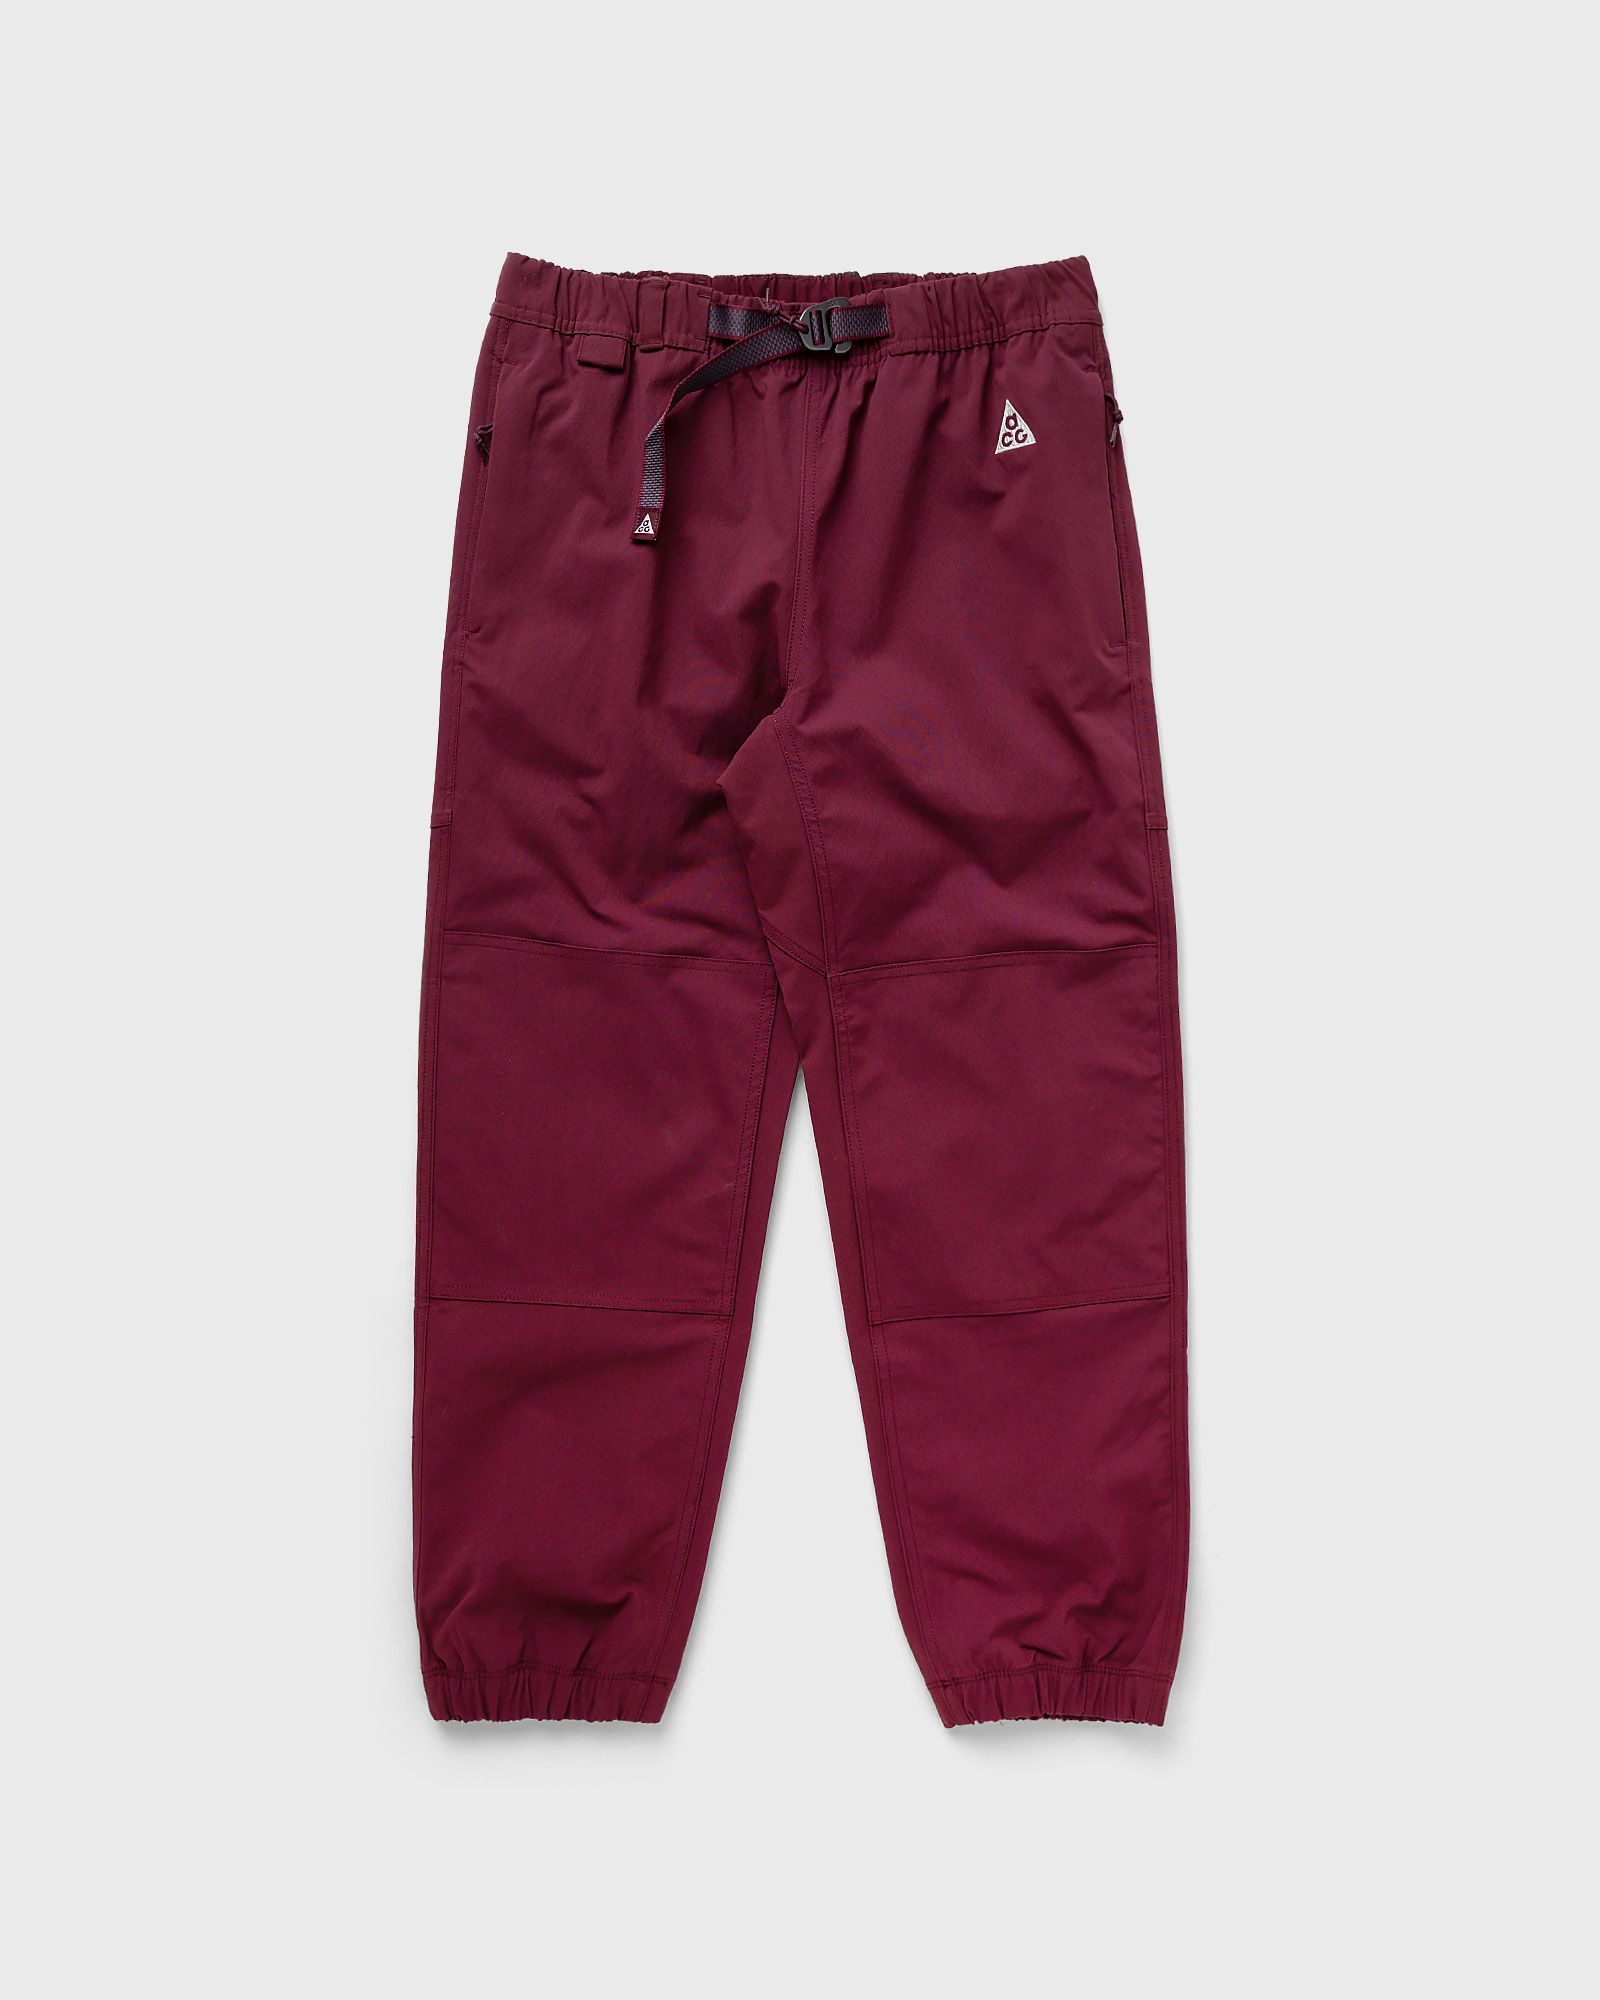 Nike - acg men's trail pants men casual pants red in größe:s